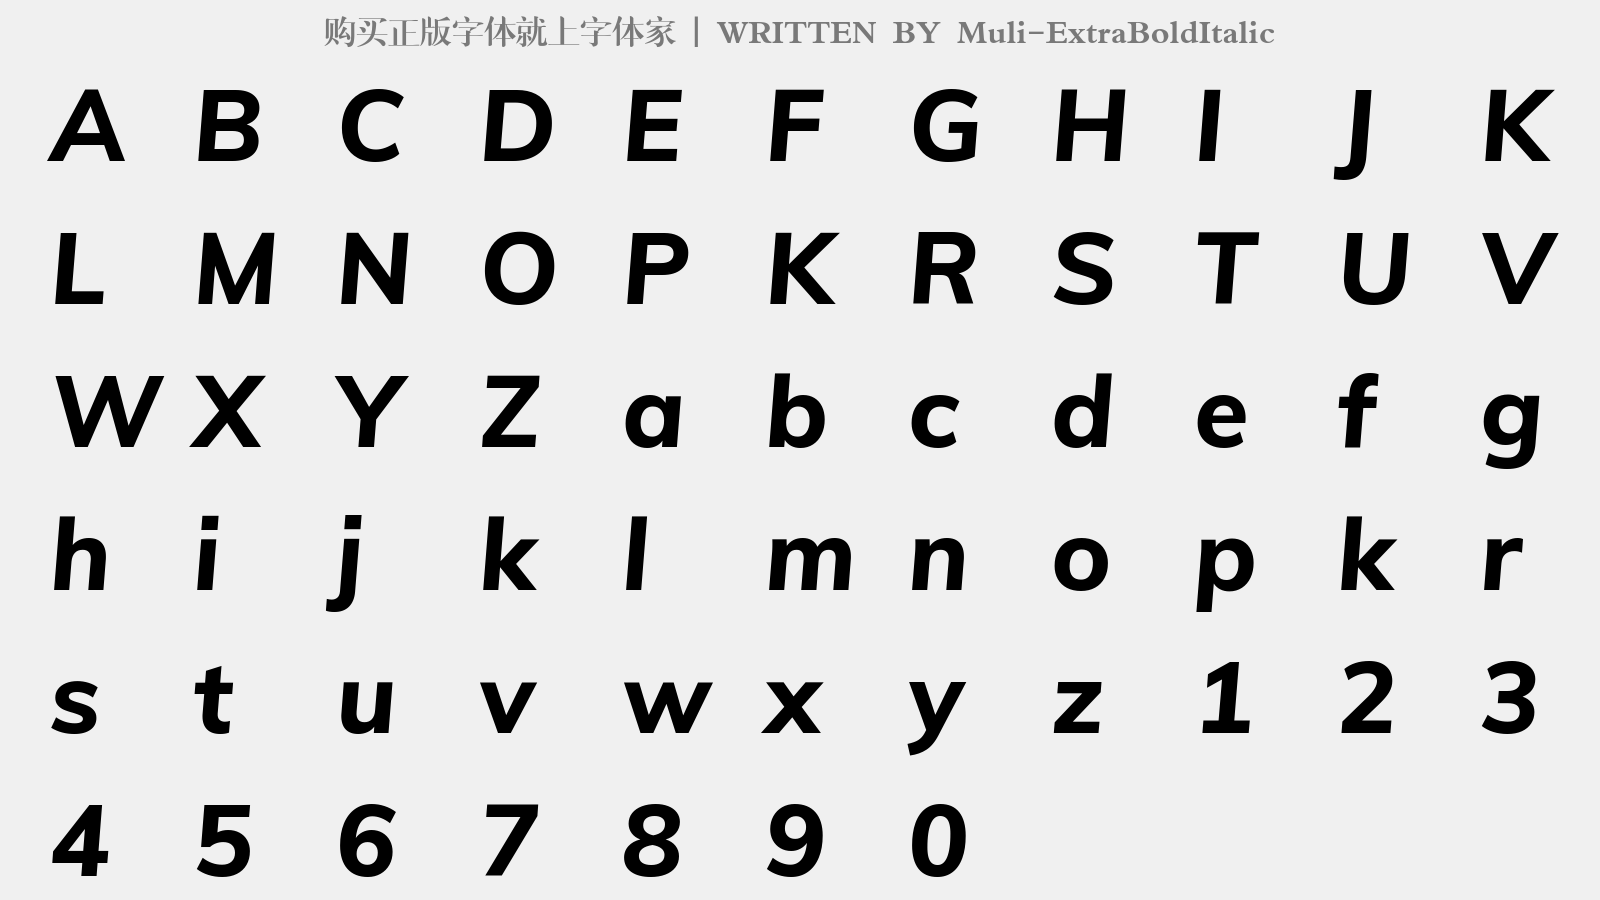 Muli-ExtraBoldItalic - 大写字母/小写字母/数字